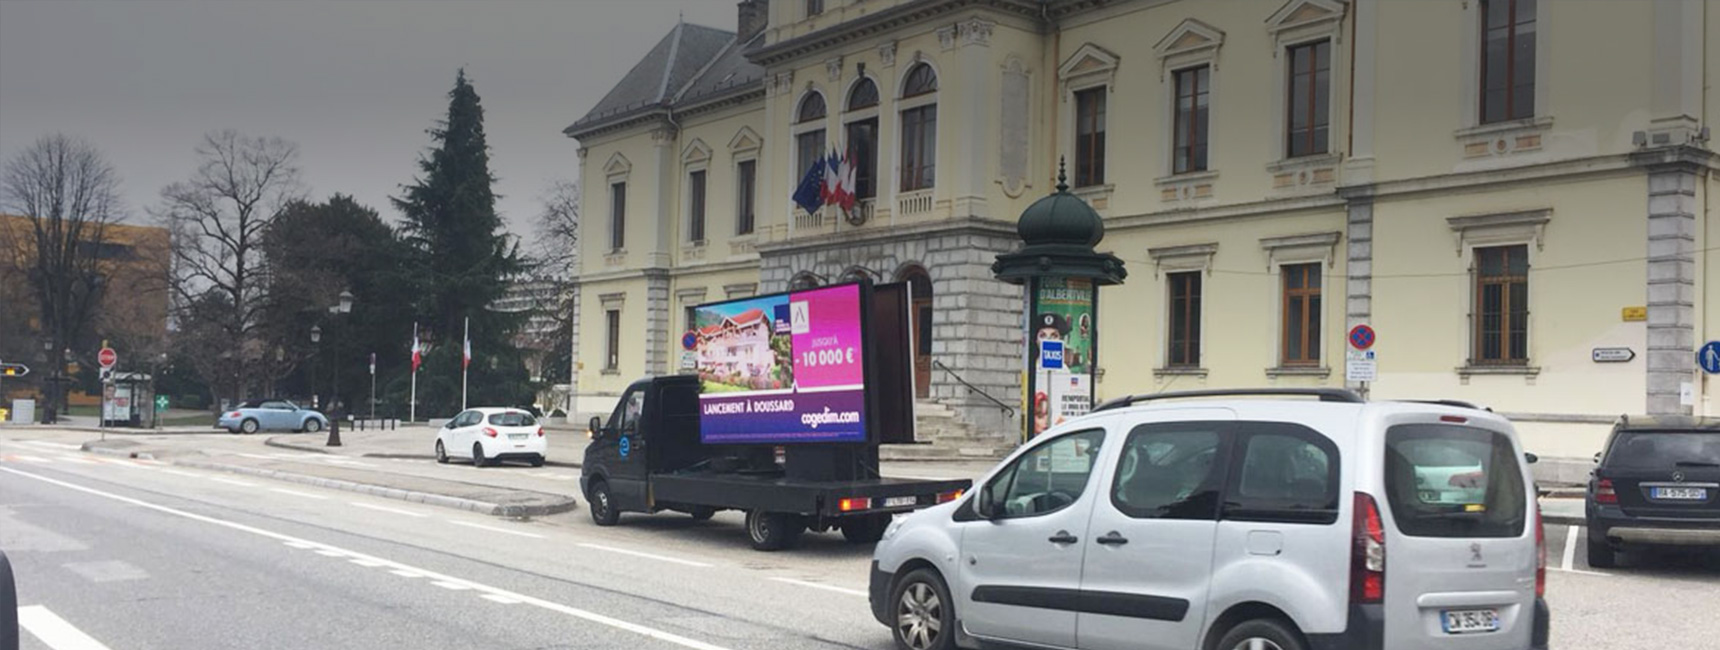 Cogedim Affichage mobile digital Keemia Lyon Agence marketing local en région Rhônes Alpes